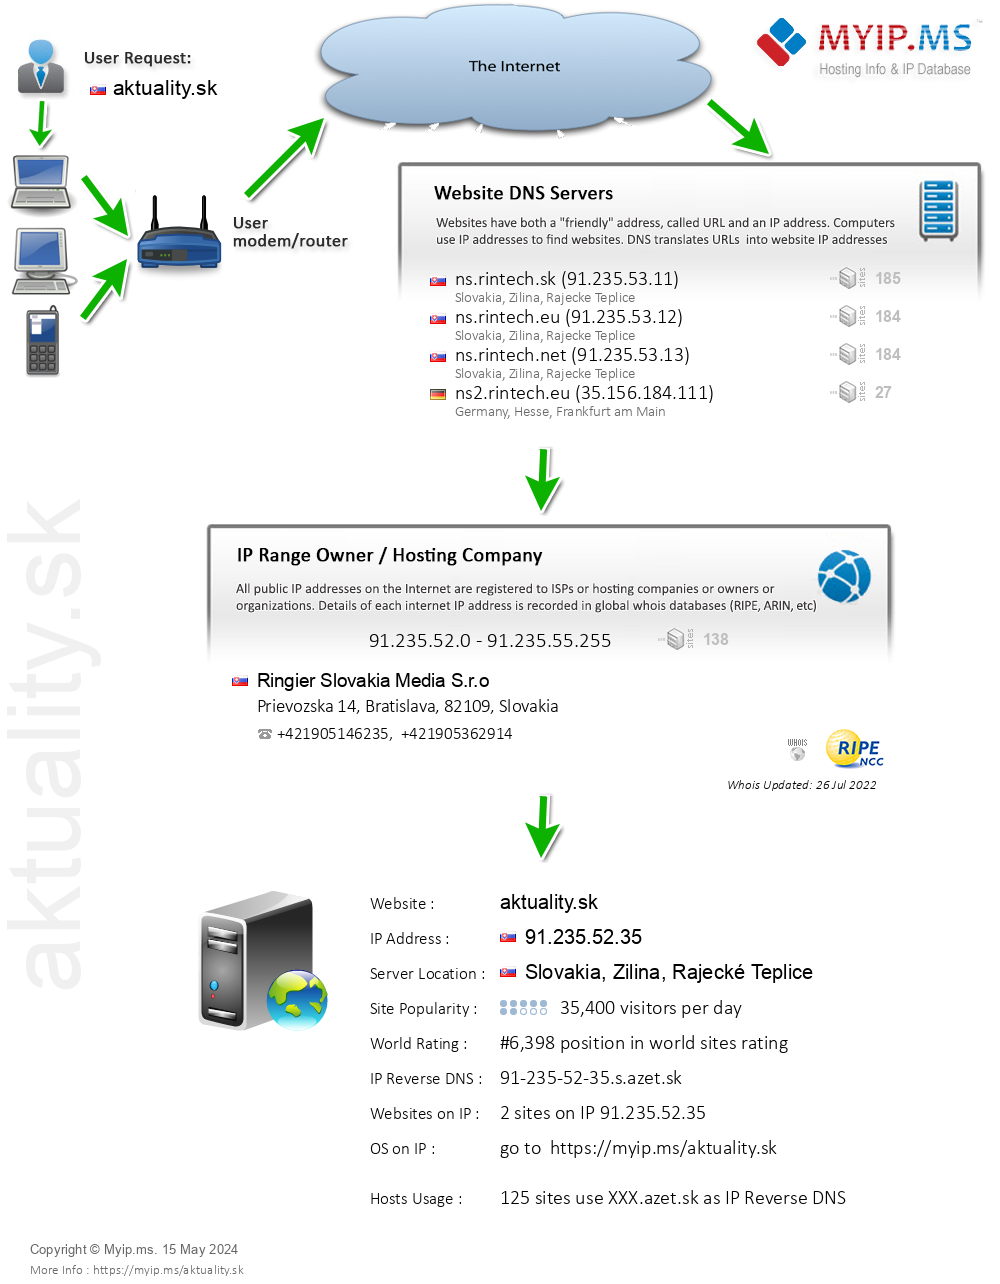 Aktuality.sk - Website Hosting Visual IP Diagram